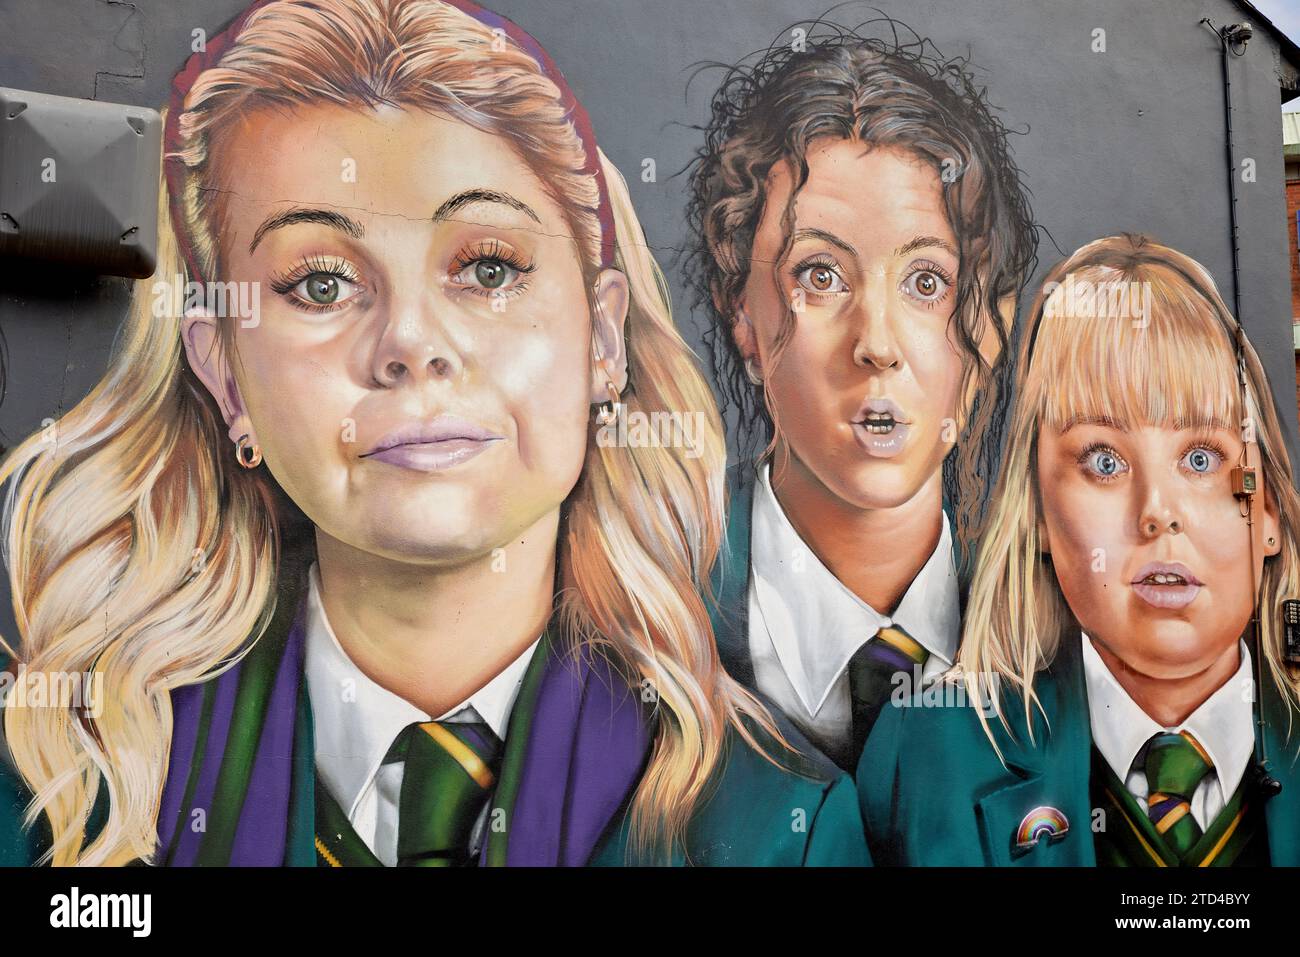 Derry Girls Mural, Derry/Londonderry, Northern Ireland Stock Photo